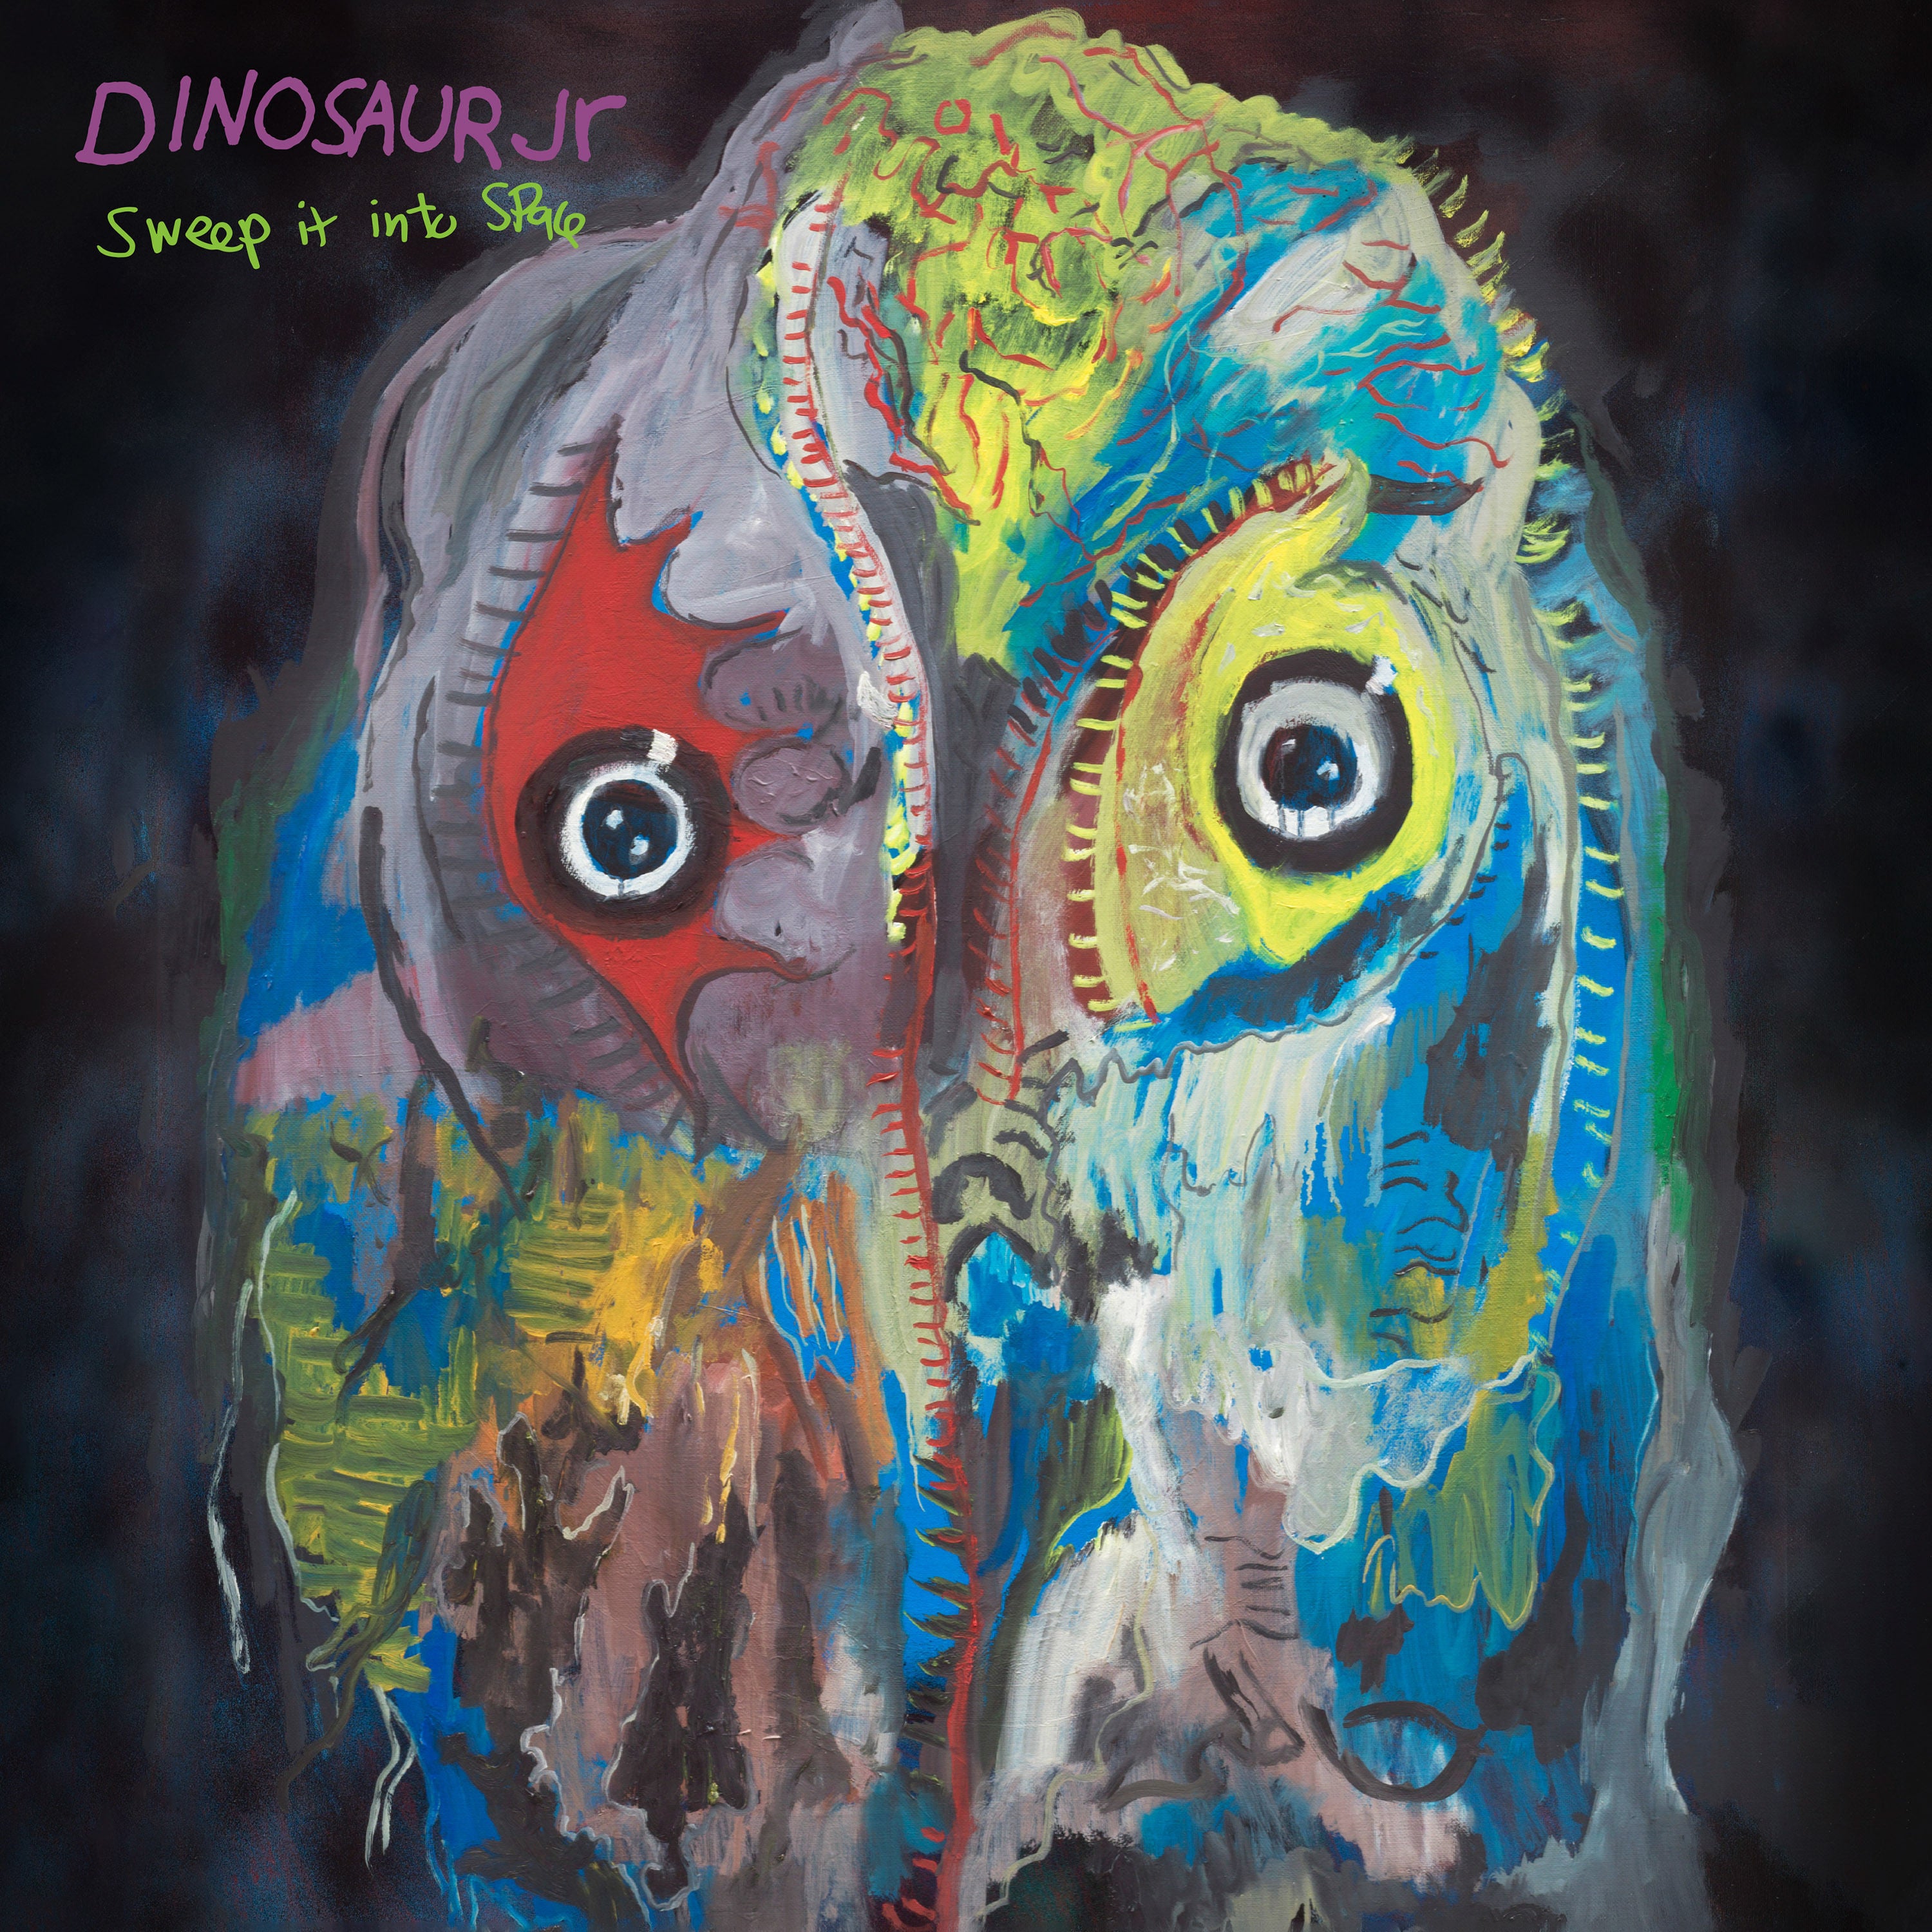 Dinosaur Jr - Sweep It Into Space: CD